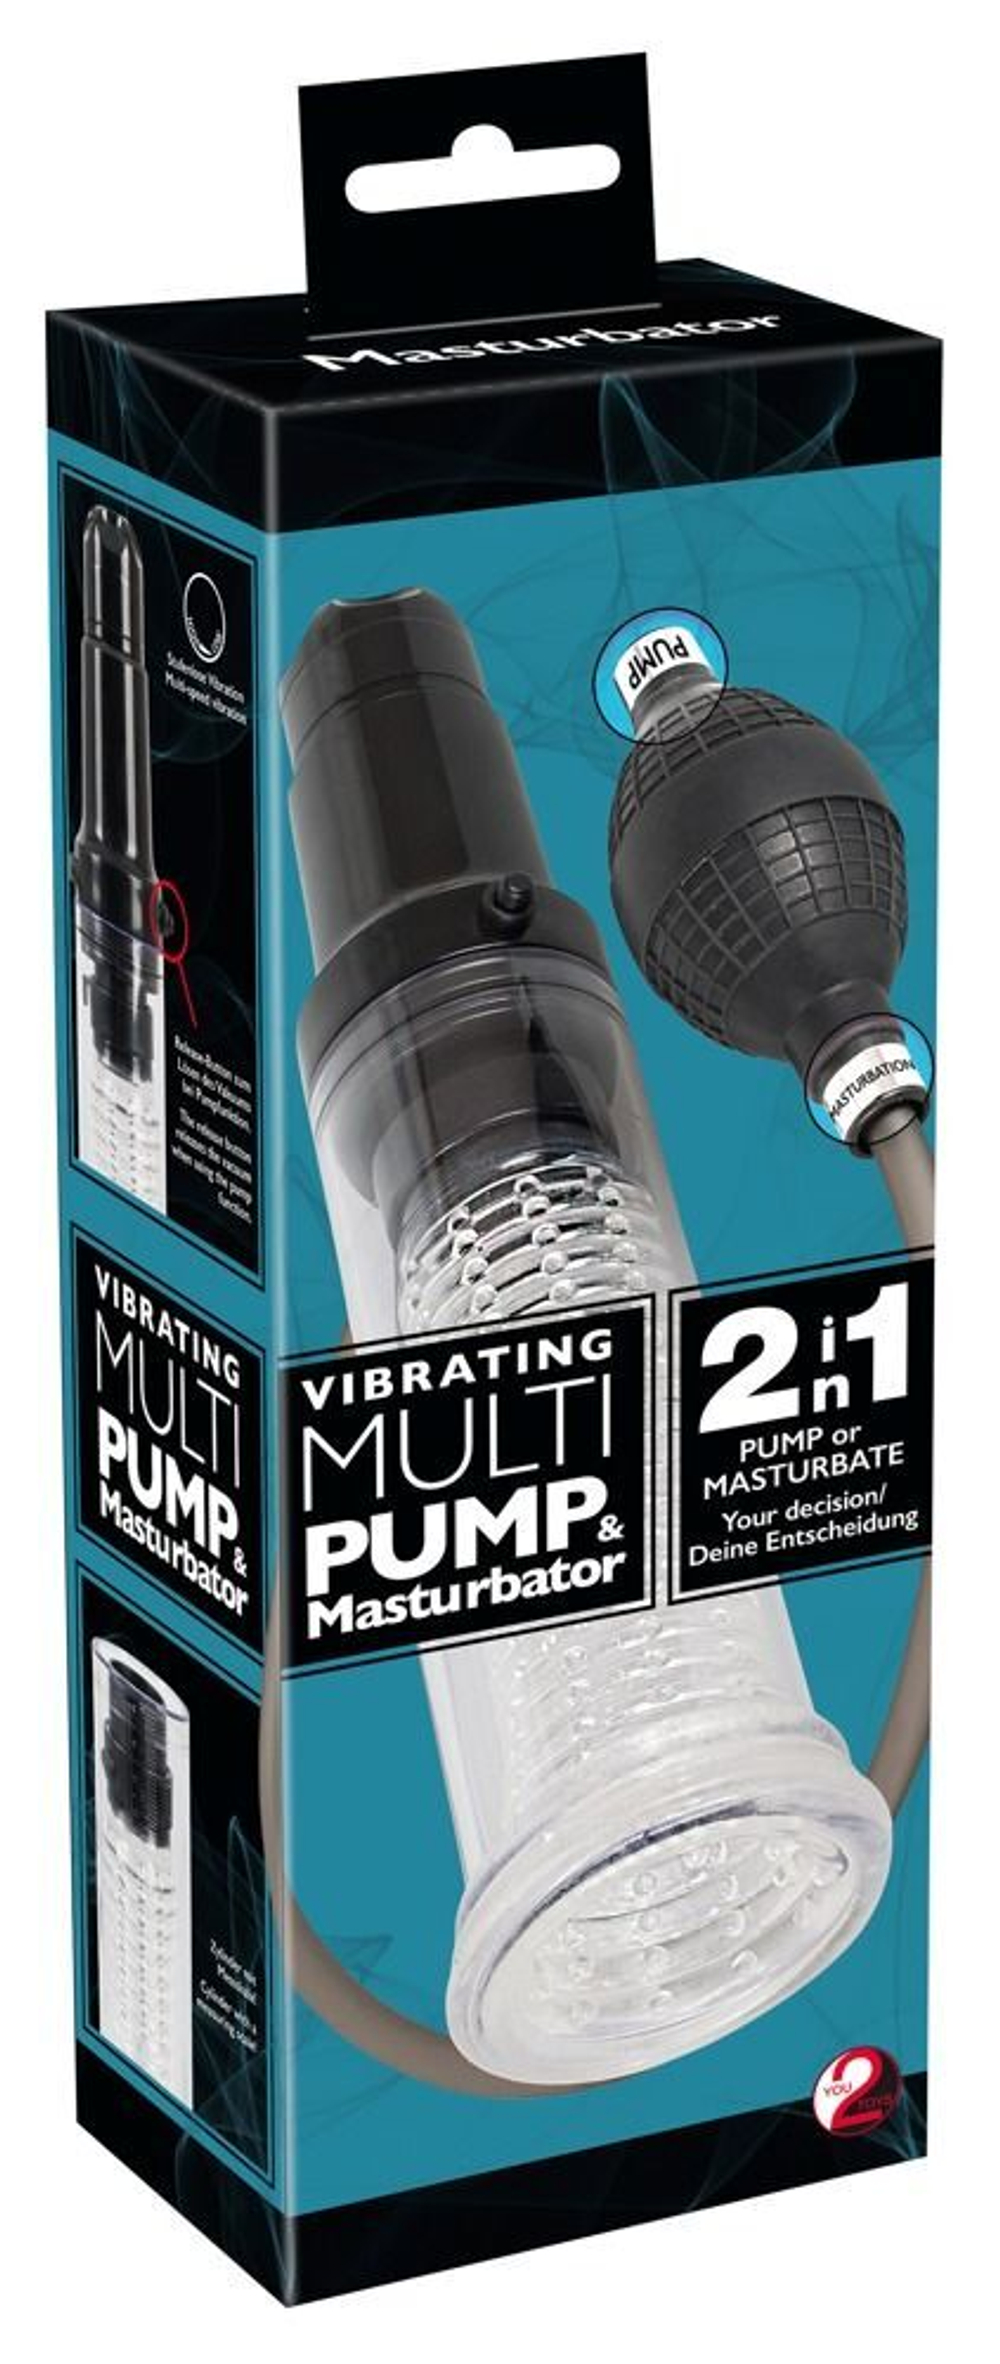 Вакуумная помпа-мастурбатор Vibrating Multi Pump & Masturbator